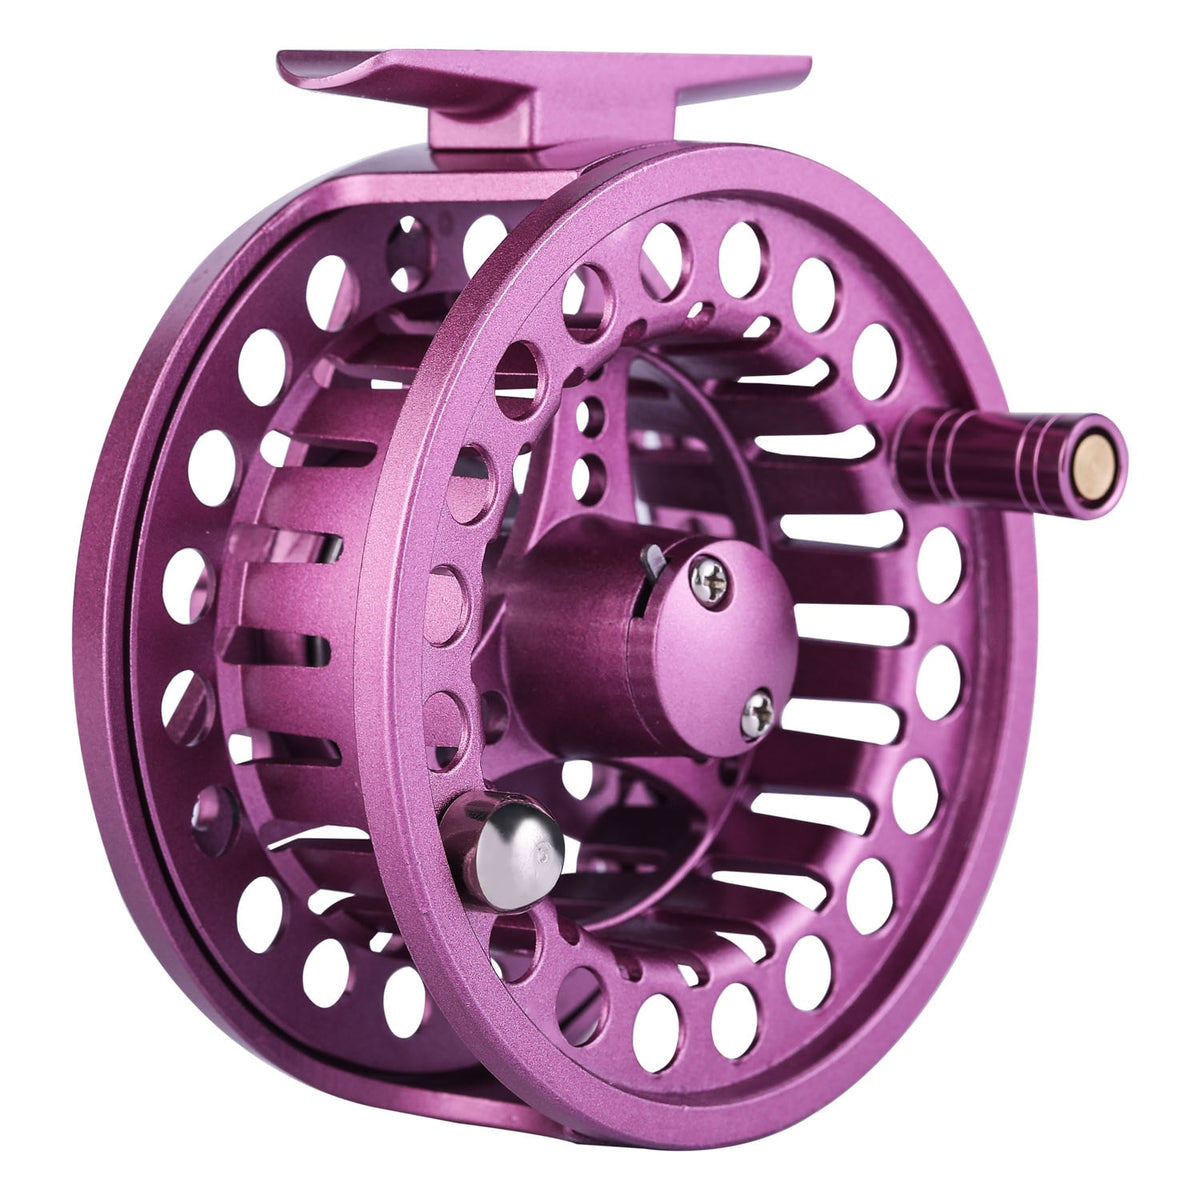 Fishing Wheel 1bb Fly Reel, Aluminum Fishing Wheel